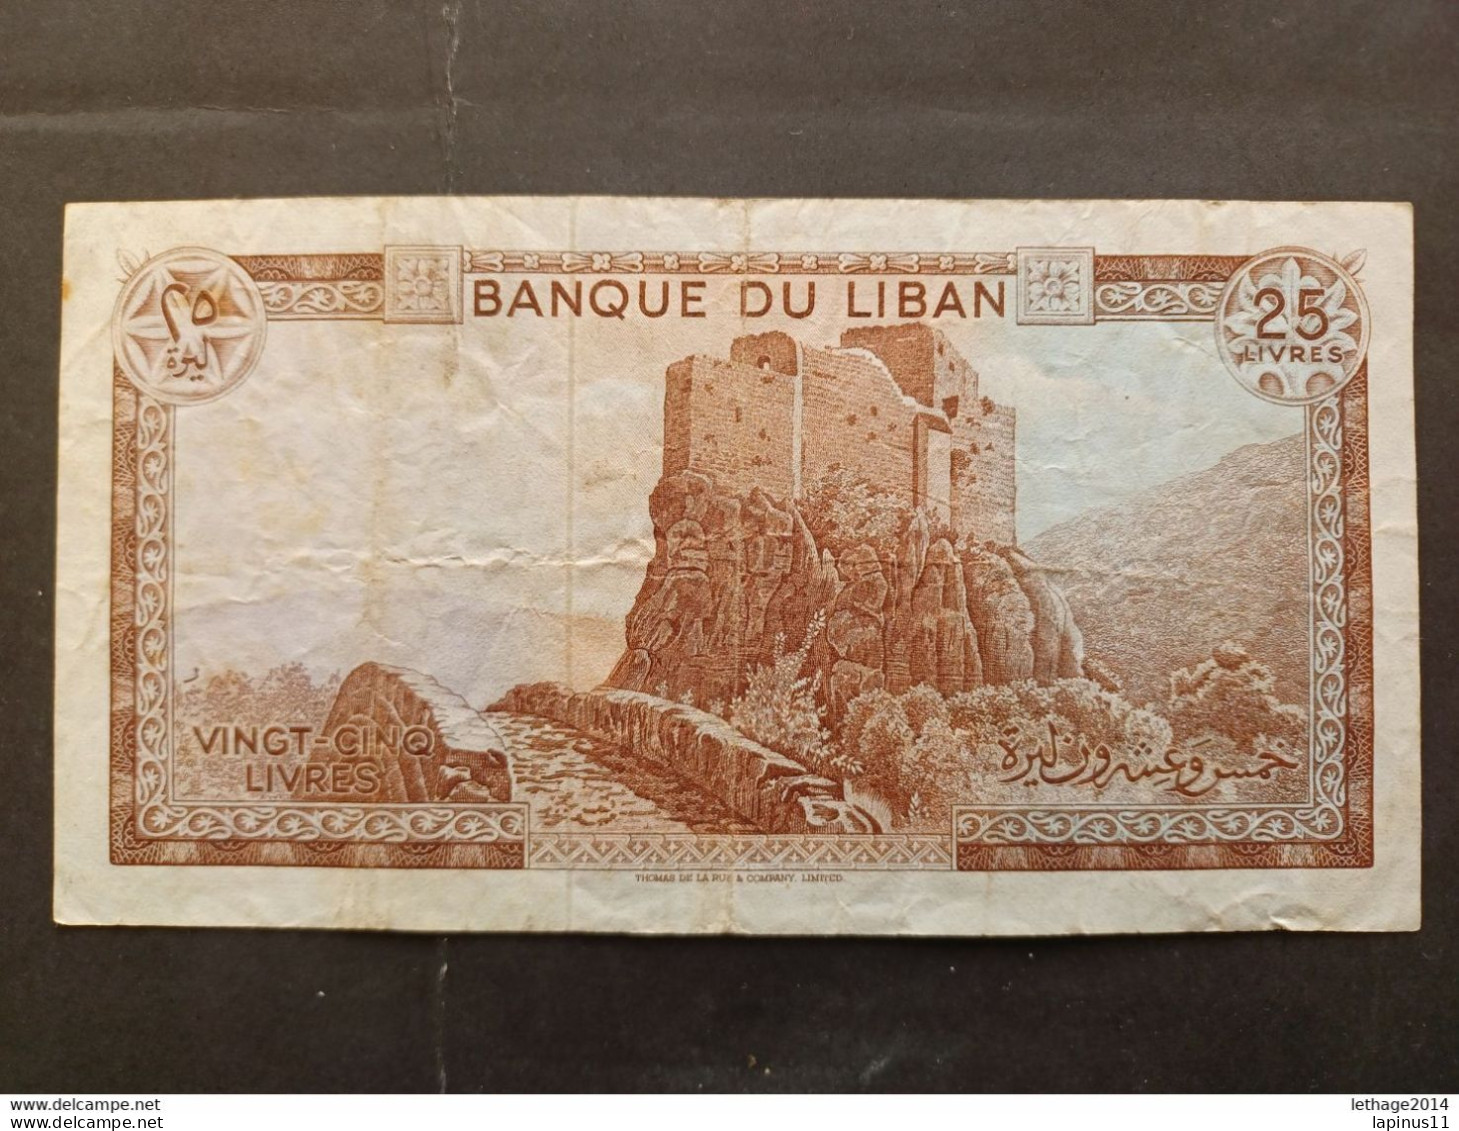 BANKNOTE LEBANON لبنان LIBAN 6x25 LIVRES 1974 CIRCULATED GOOD CONDITION - Libanon